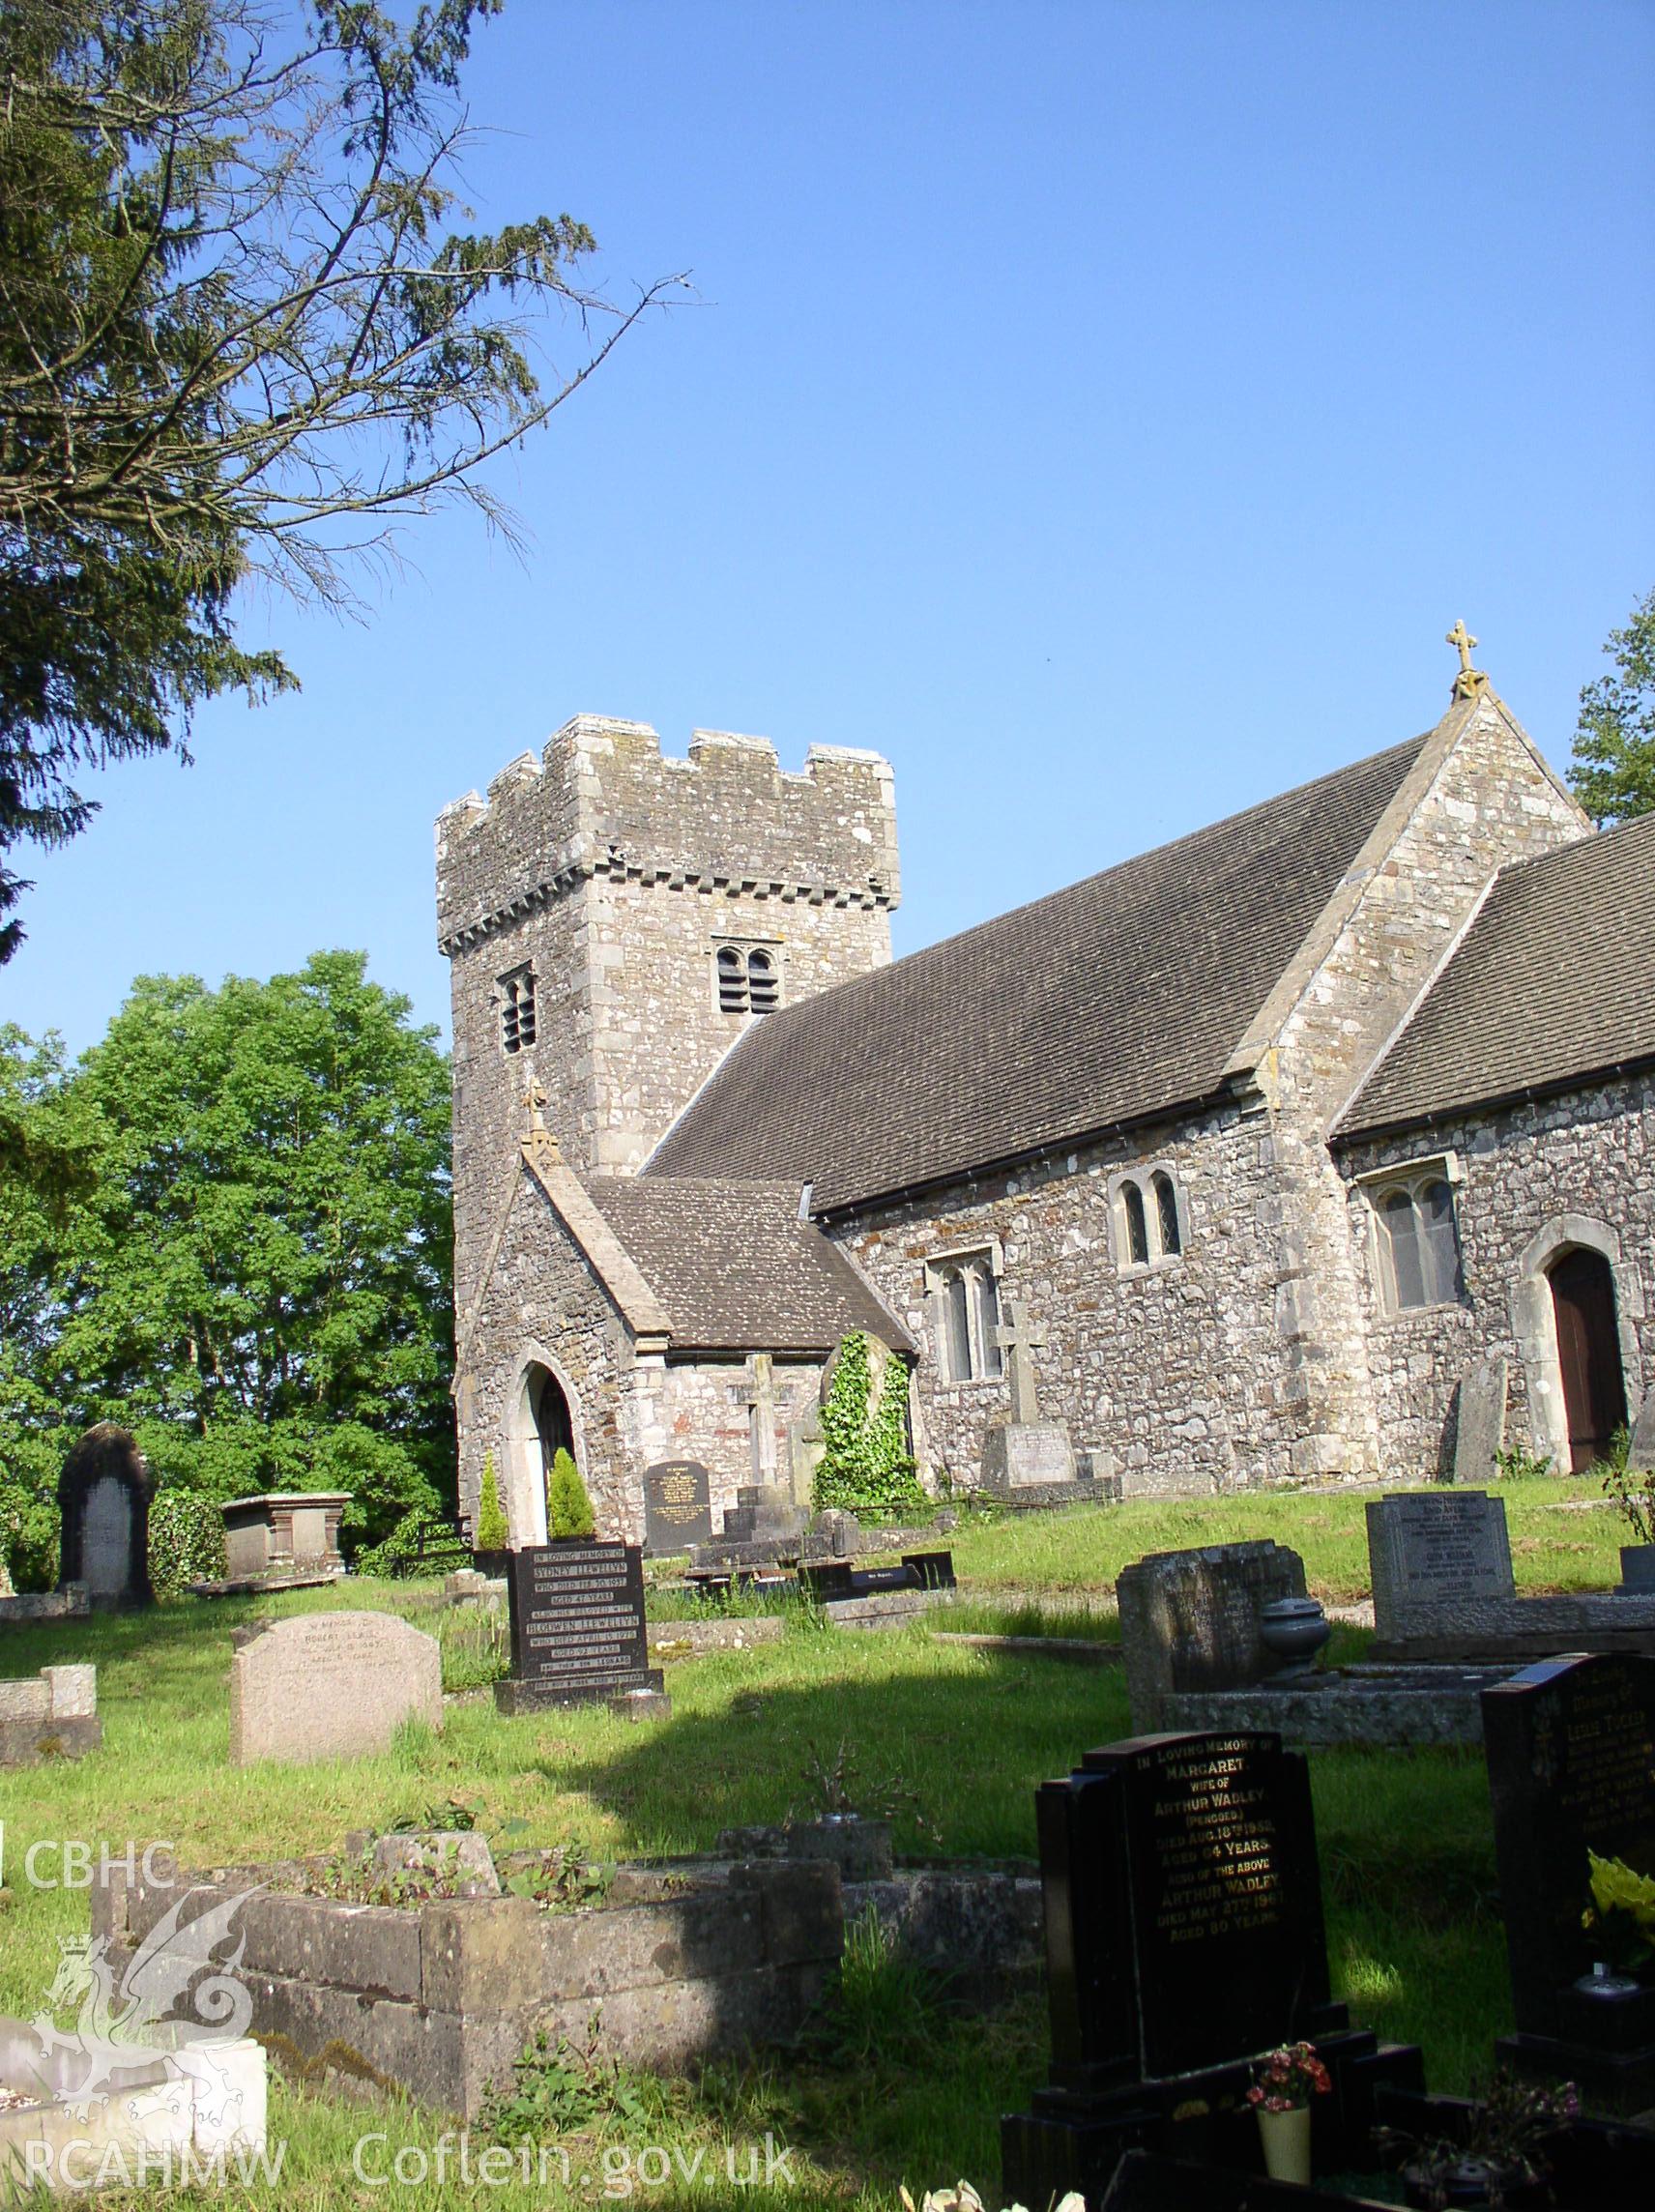 Colour digital photograph showing the exterior of St Illtyd's church, Llanilid; Glamorgan.